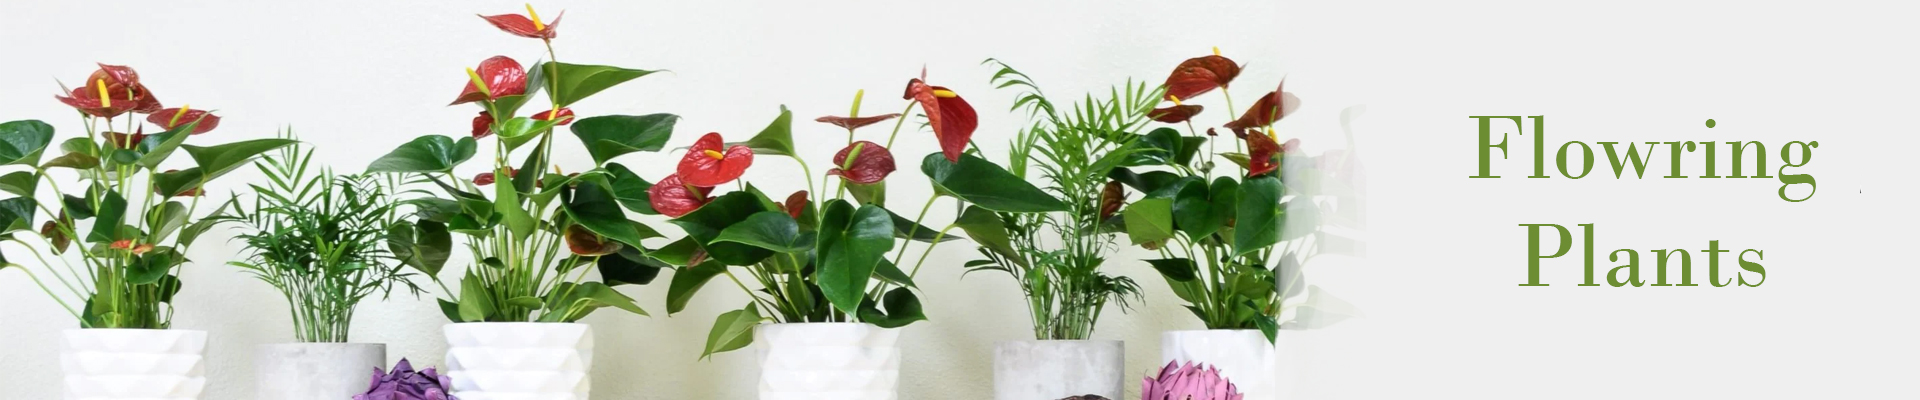 Flowerplants